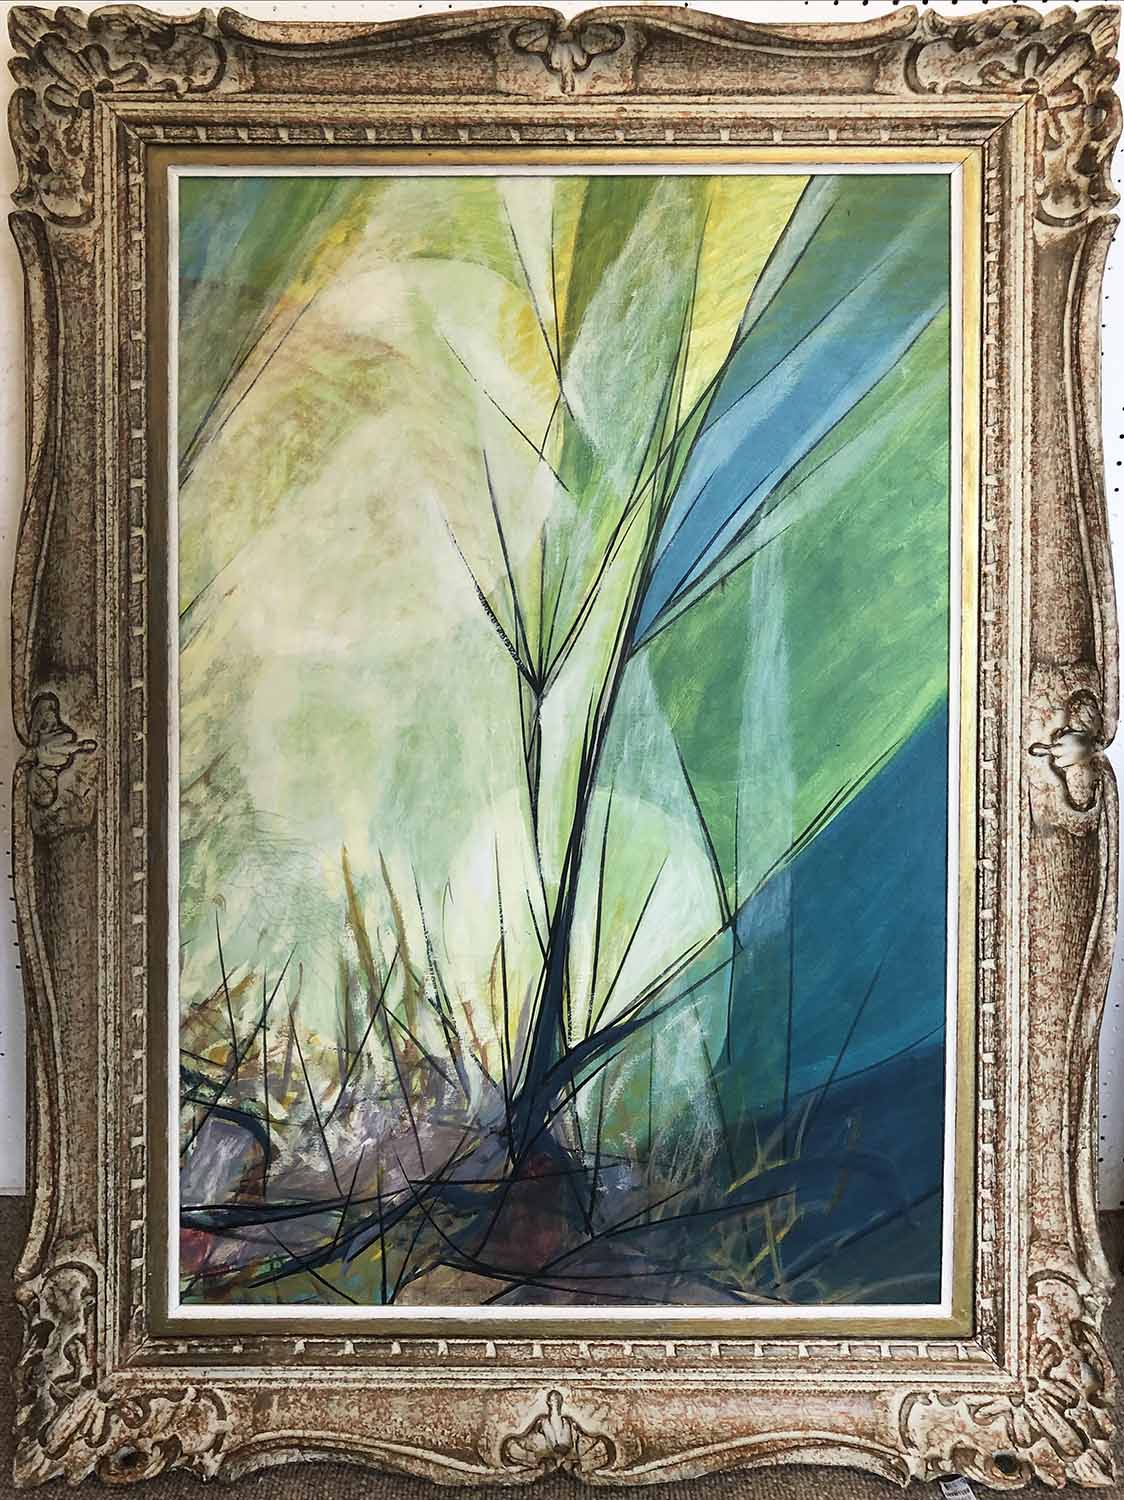 MANNER OF GRAEME SUTHERLAND, 'Grass' oil on canvas 73cm x 49cm, framed.